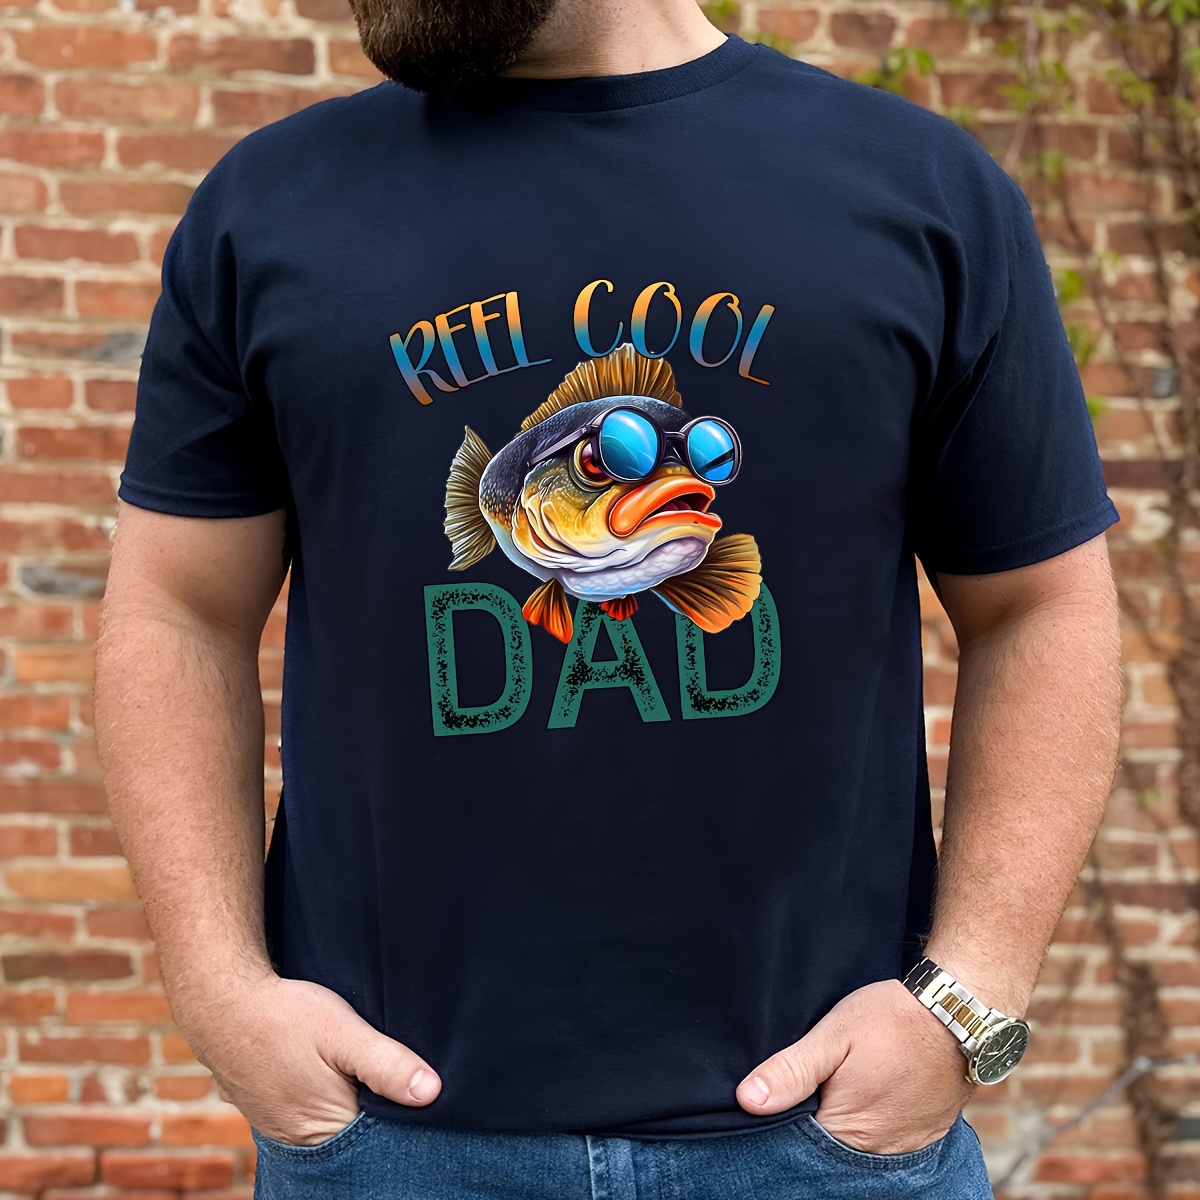 Fishing Man Designs Diy Iron Transfers Stickers T shirts - Temu